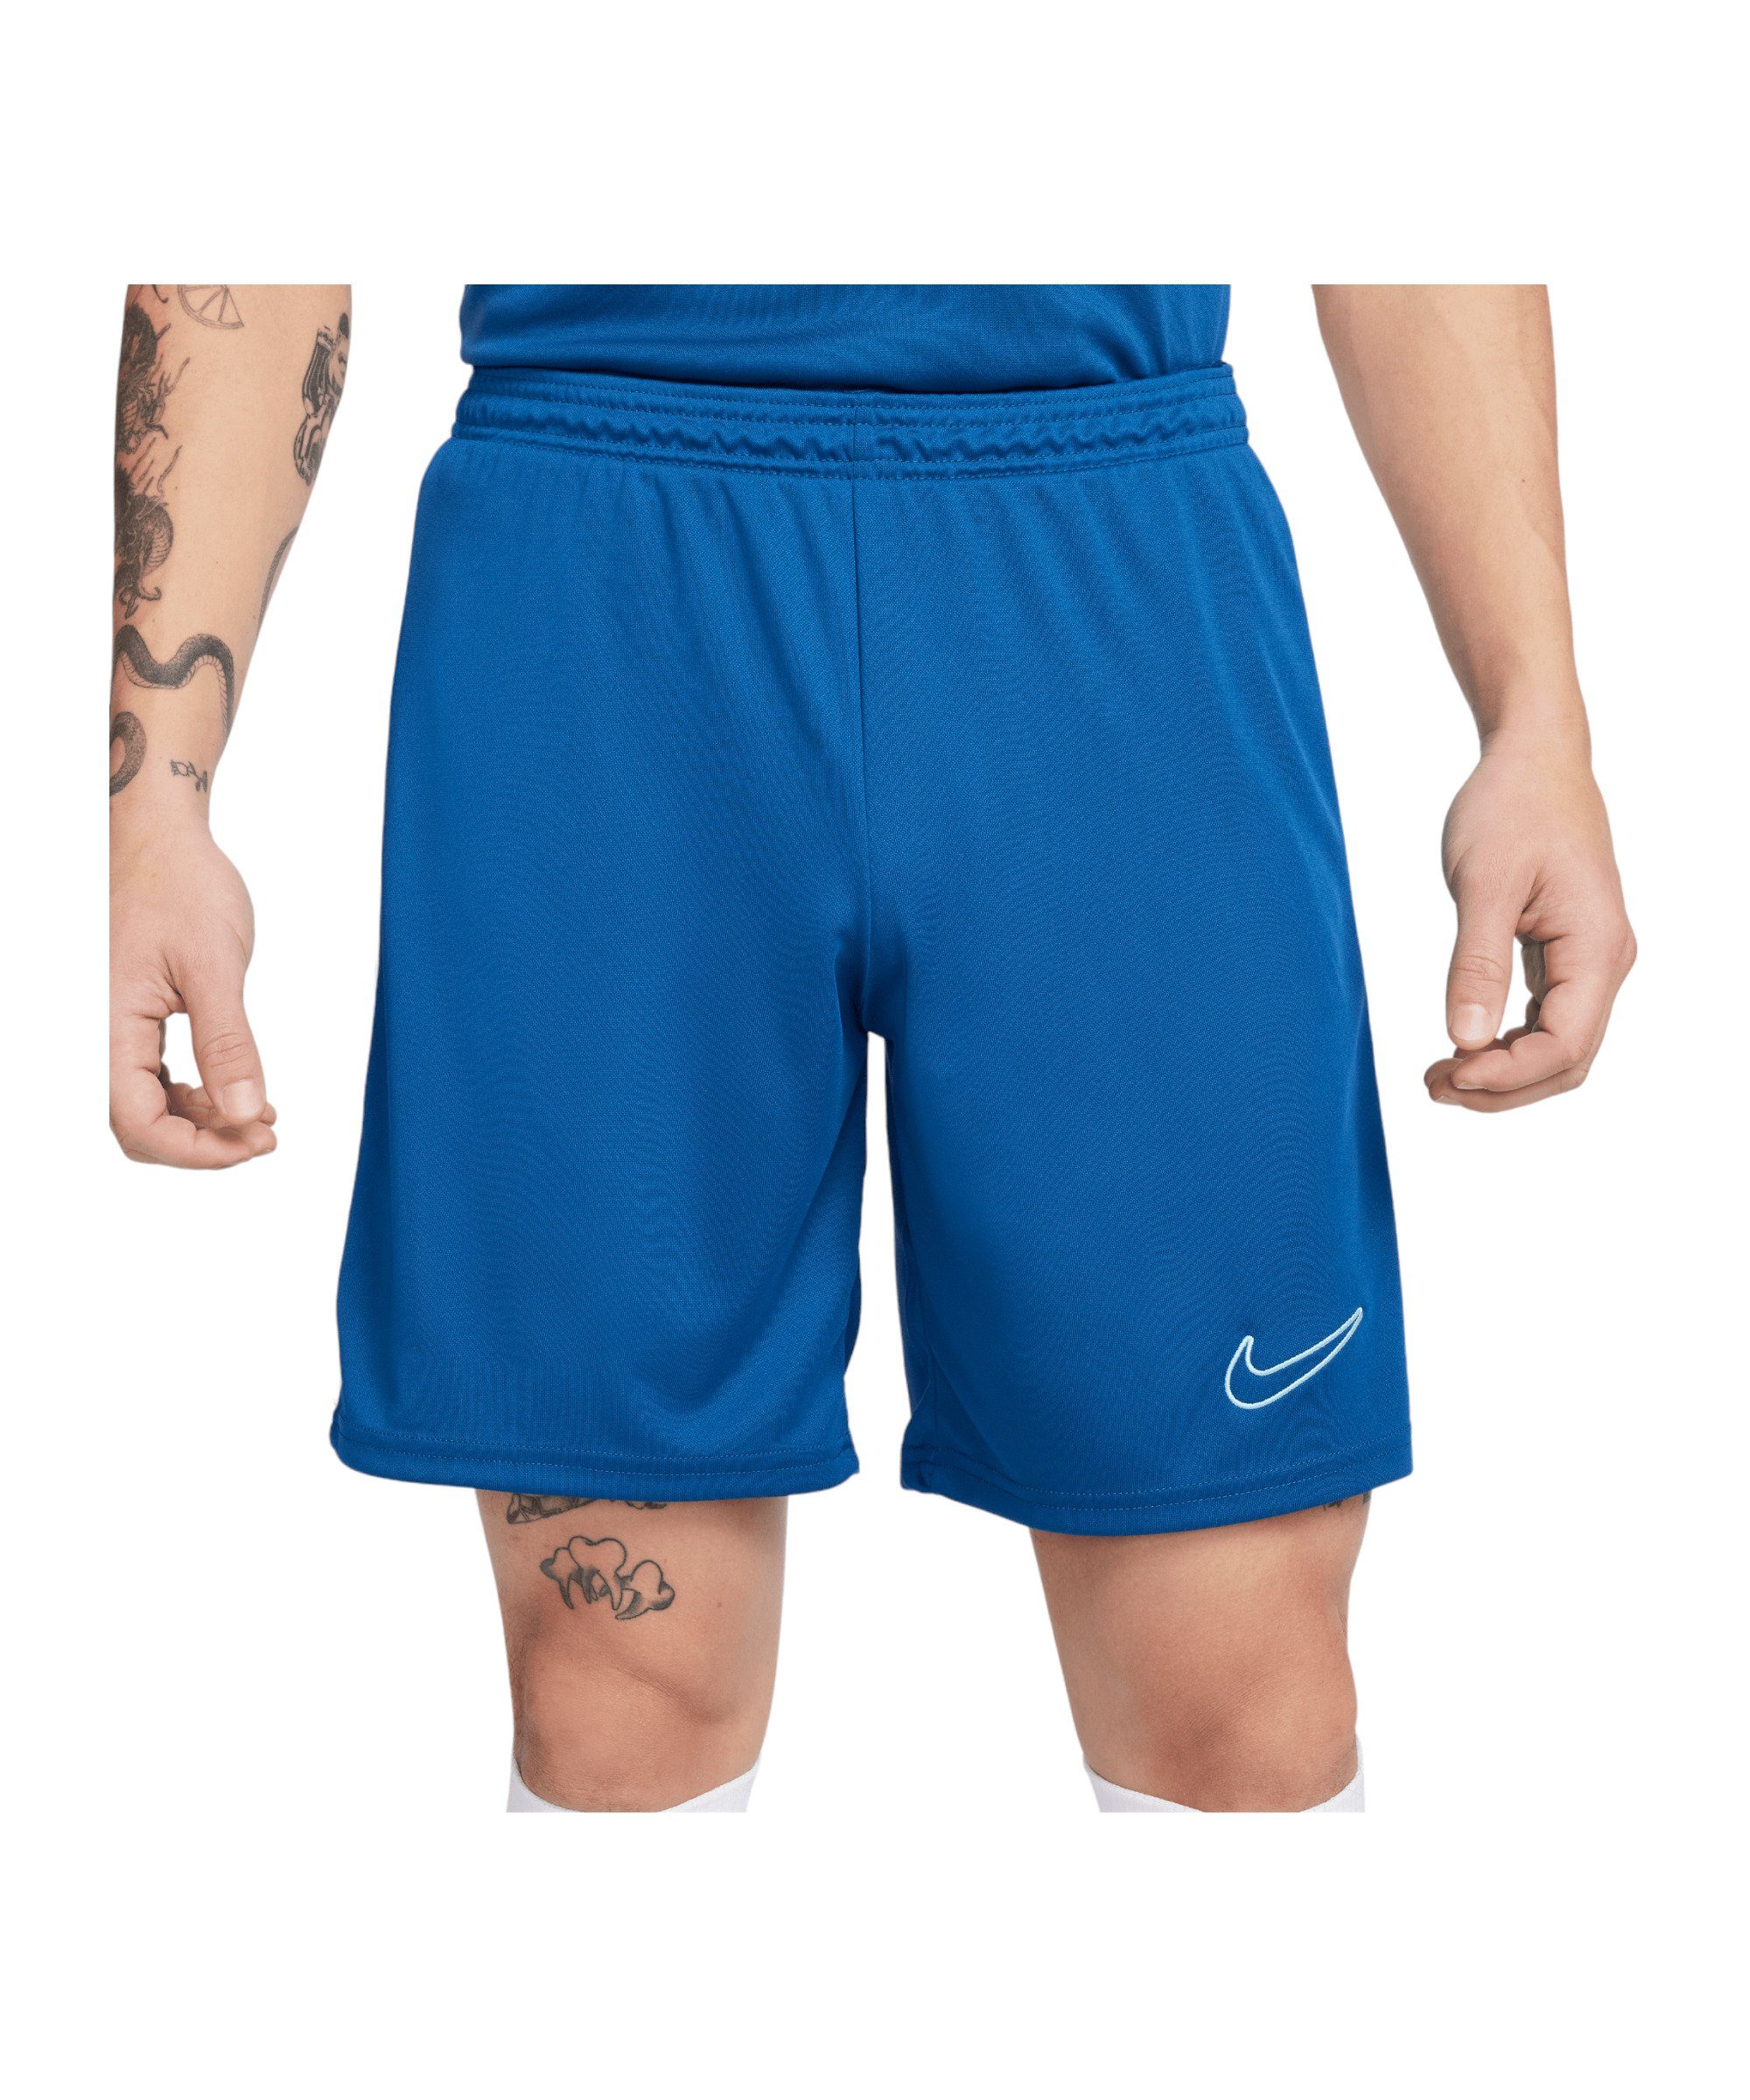 Nike Sporthose Academy Short